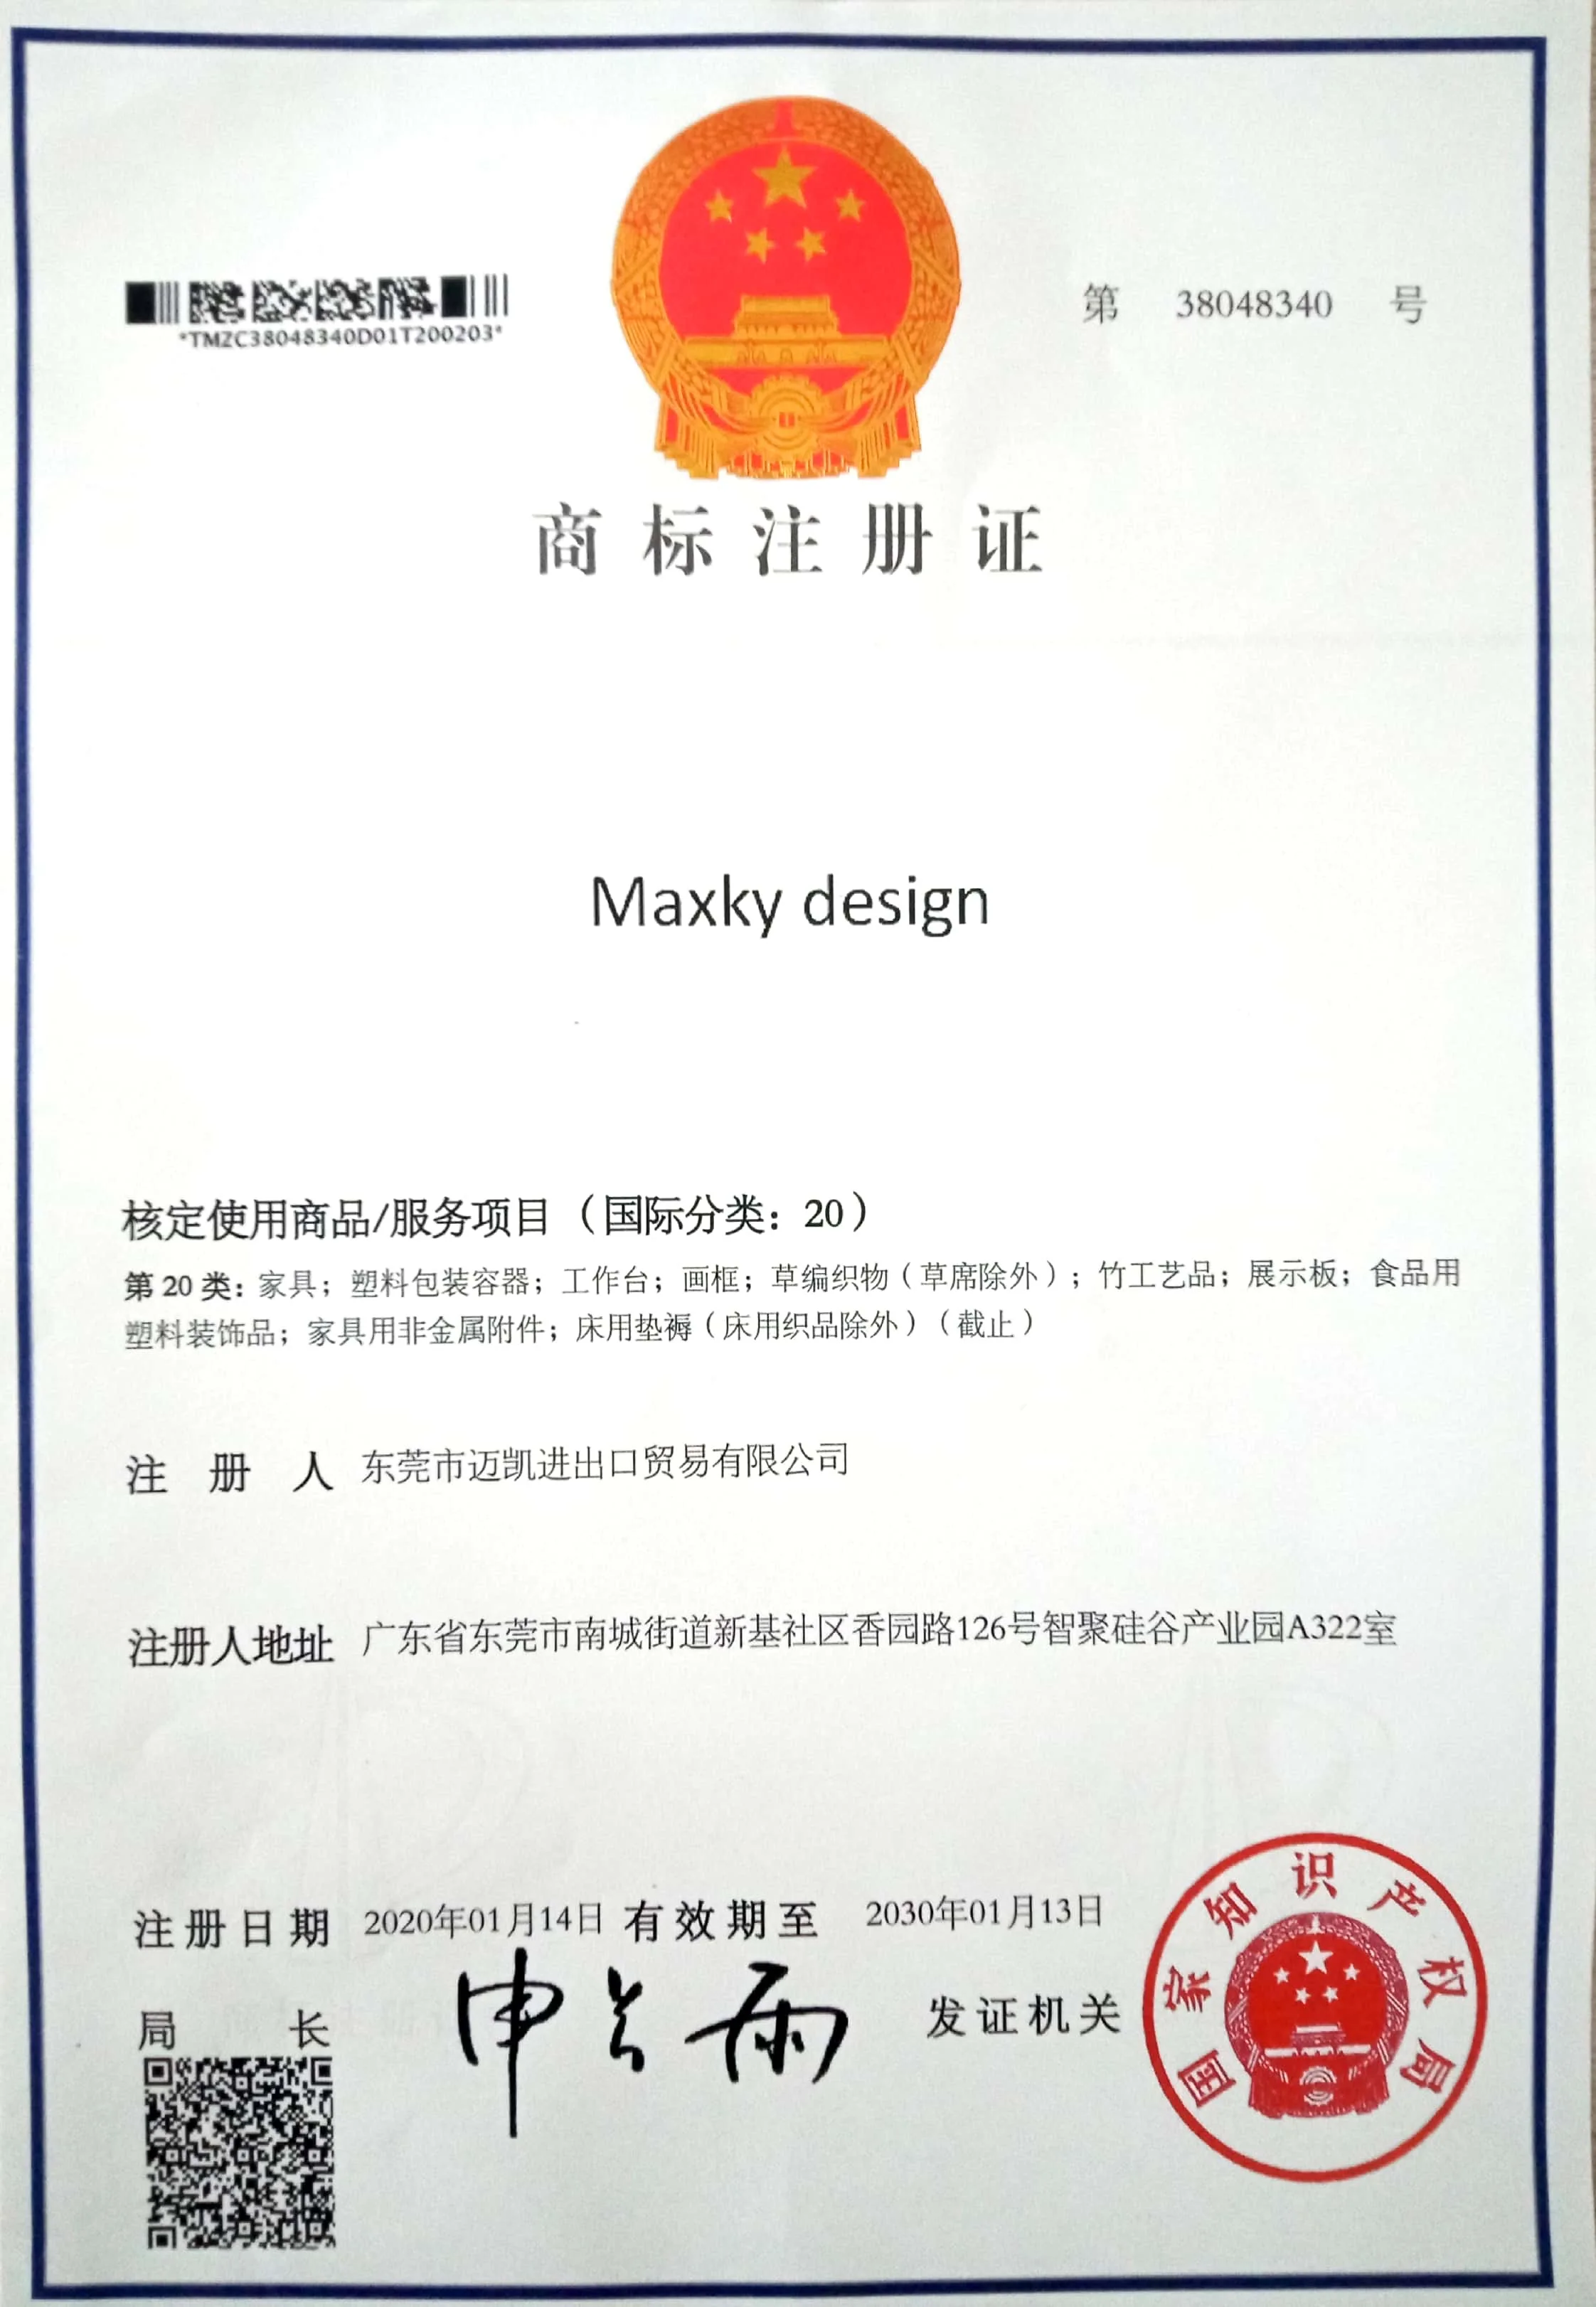 Maxky design